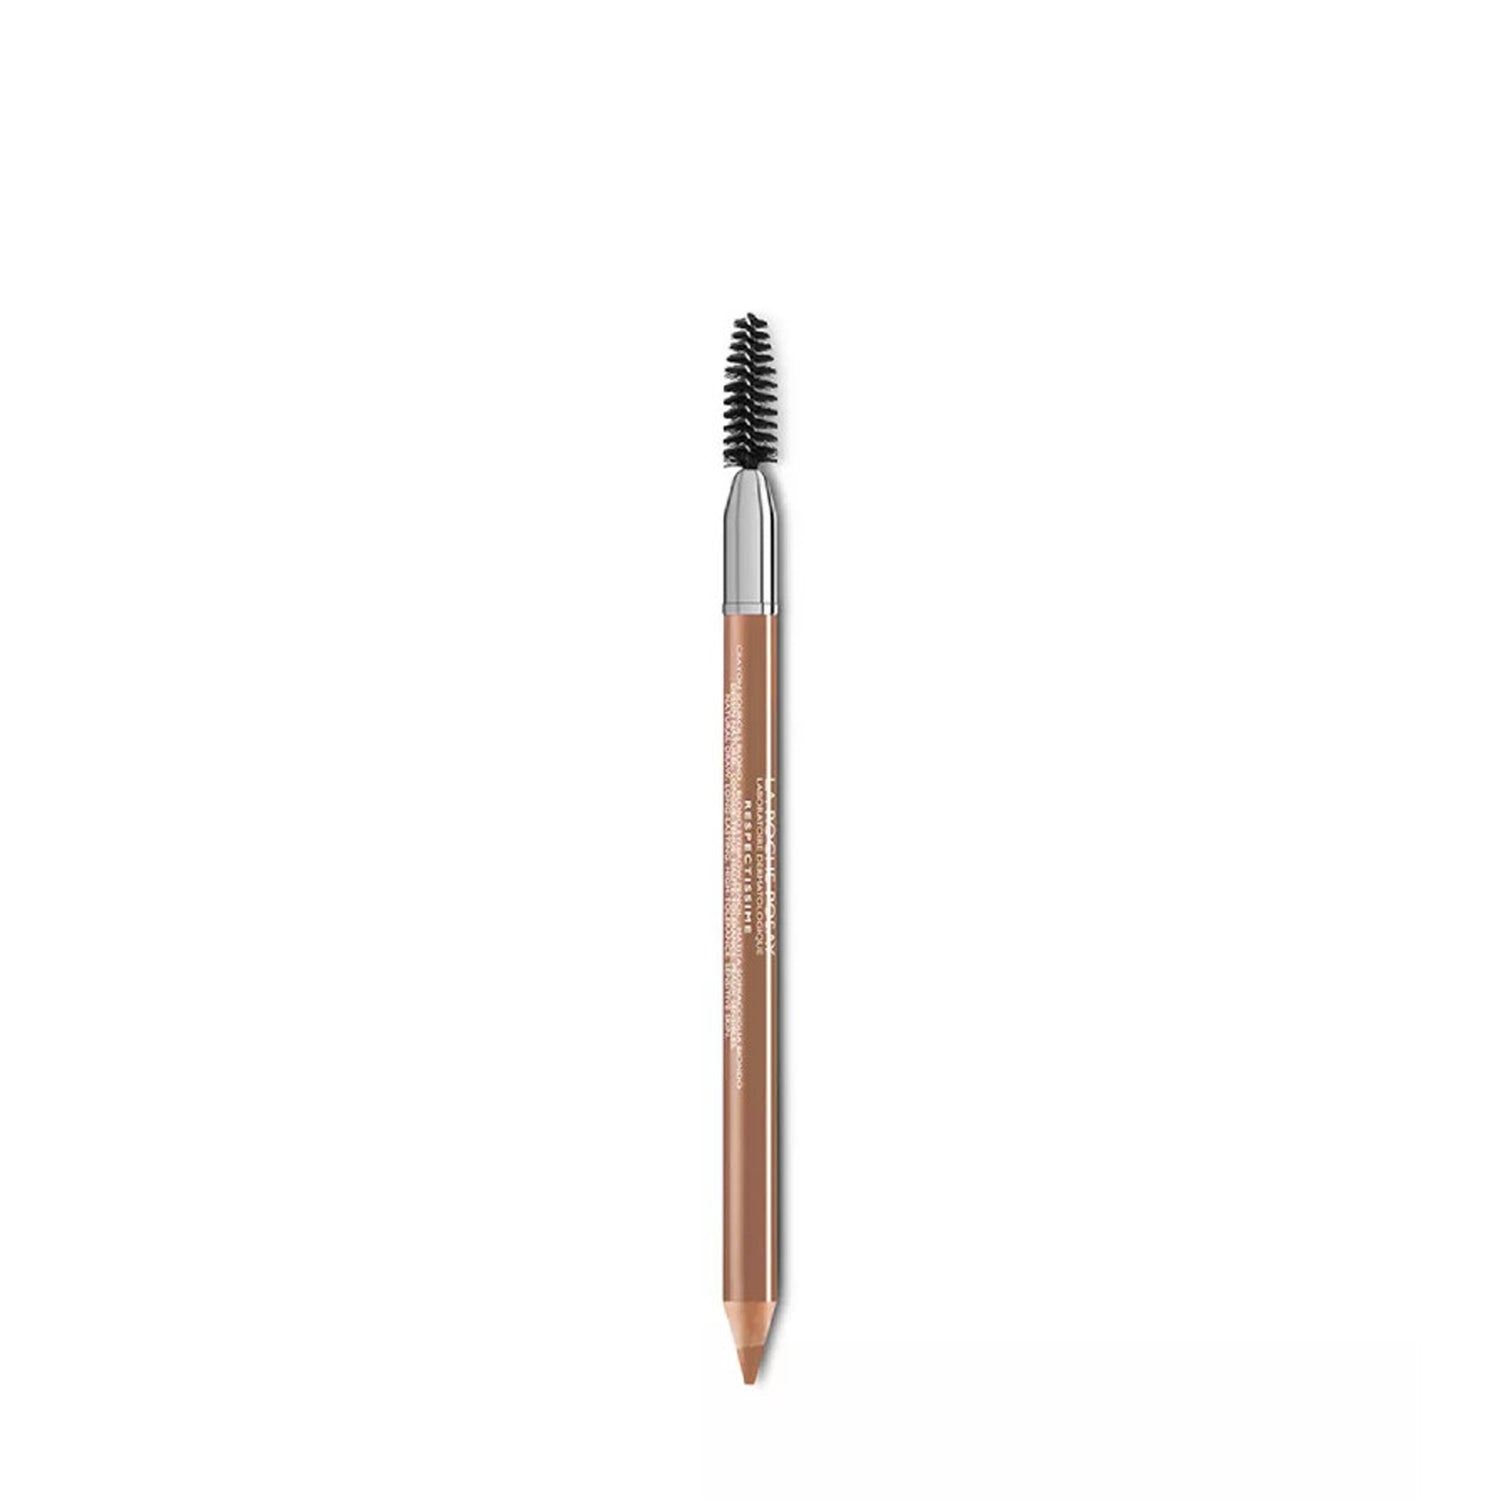 La Roche-Posay Respectissime Blond Eyebrown Pencil 1.3g